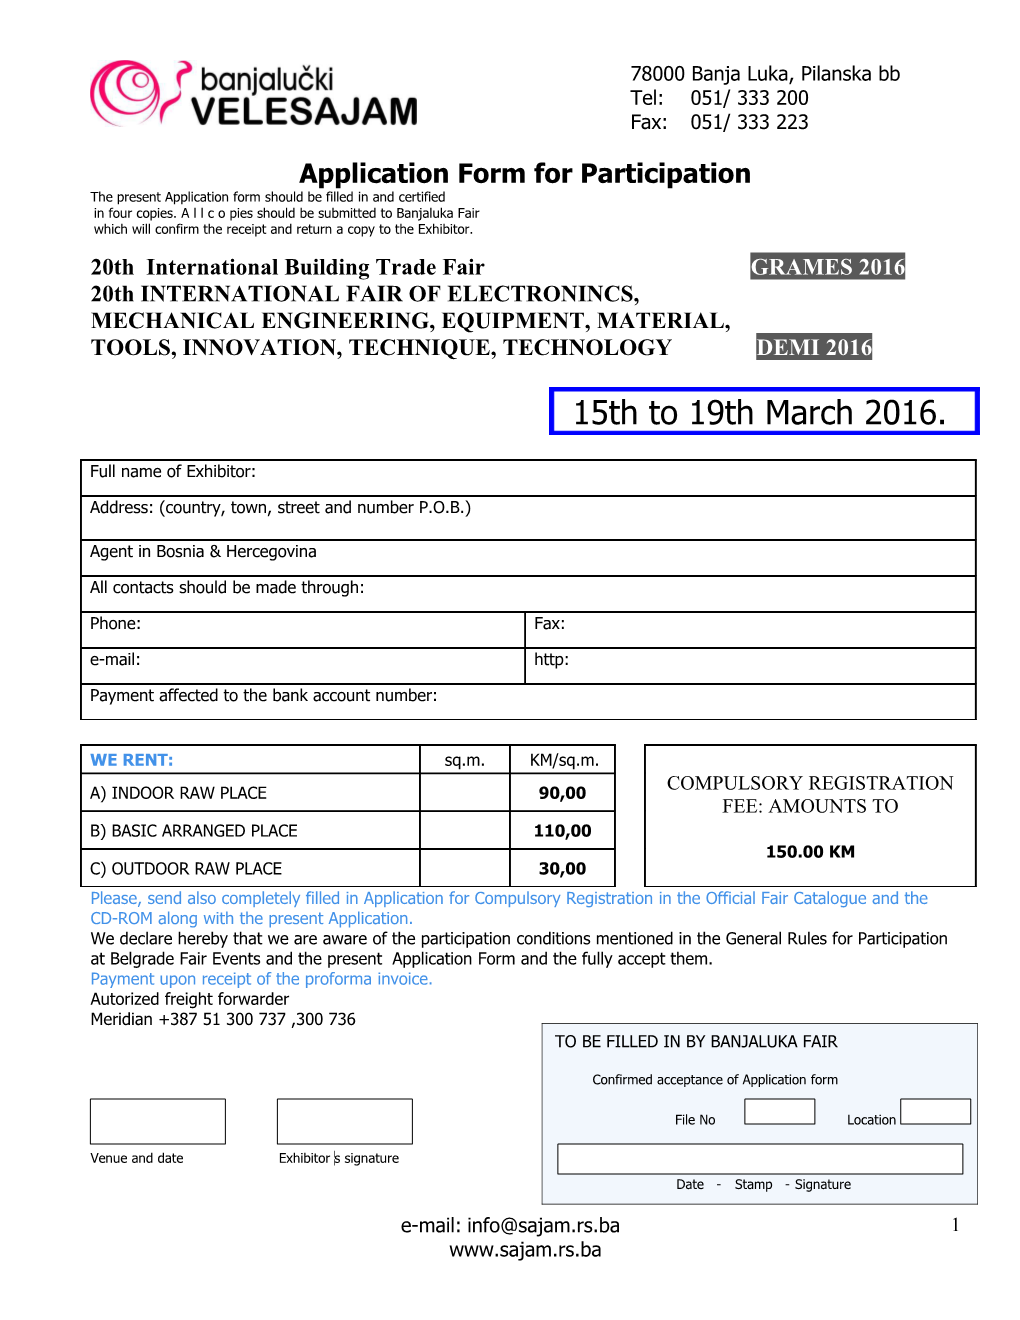 Application Form for Participation